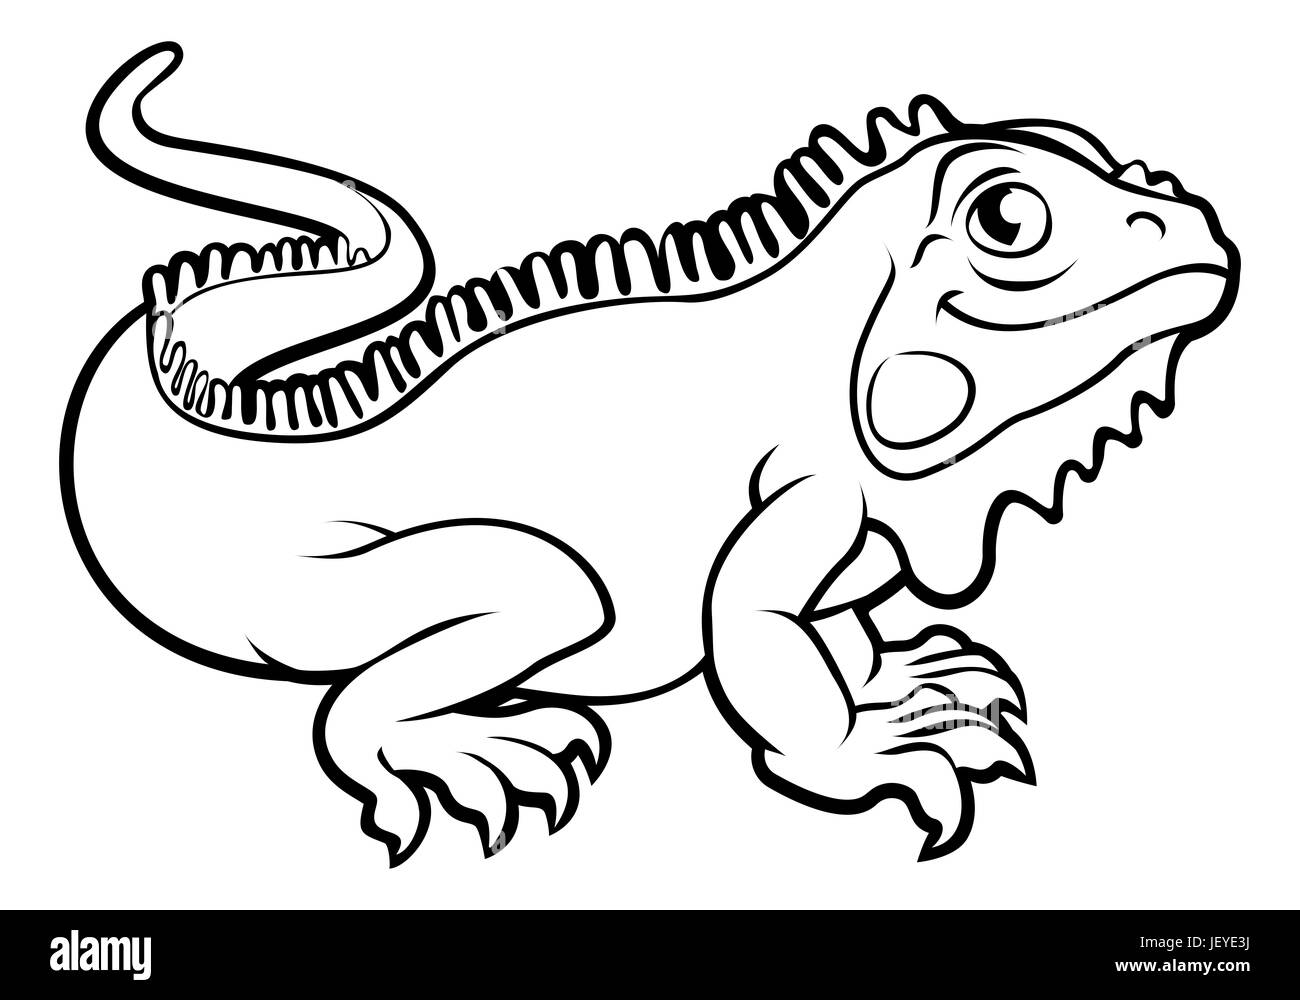 an iguana lizard cartoon character outline coloring illustration JEYE3J